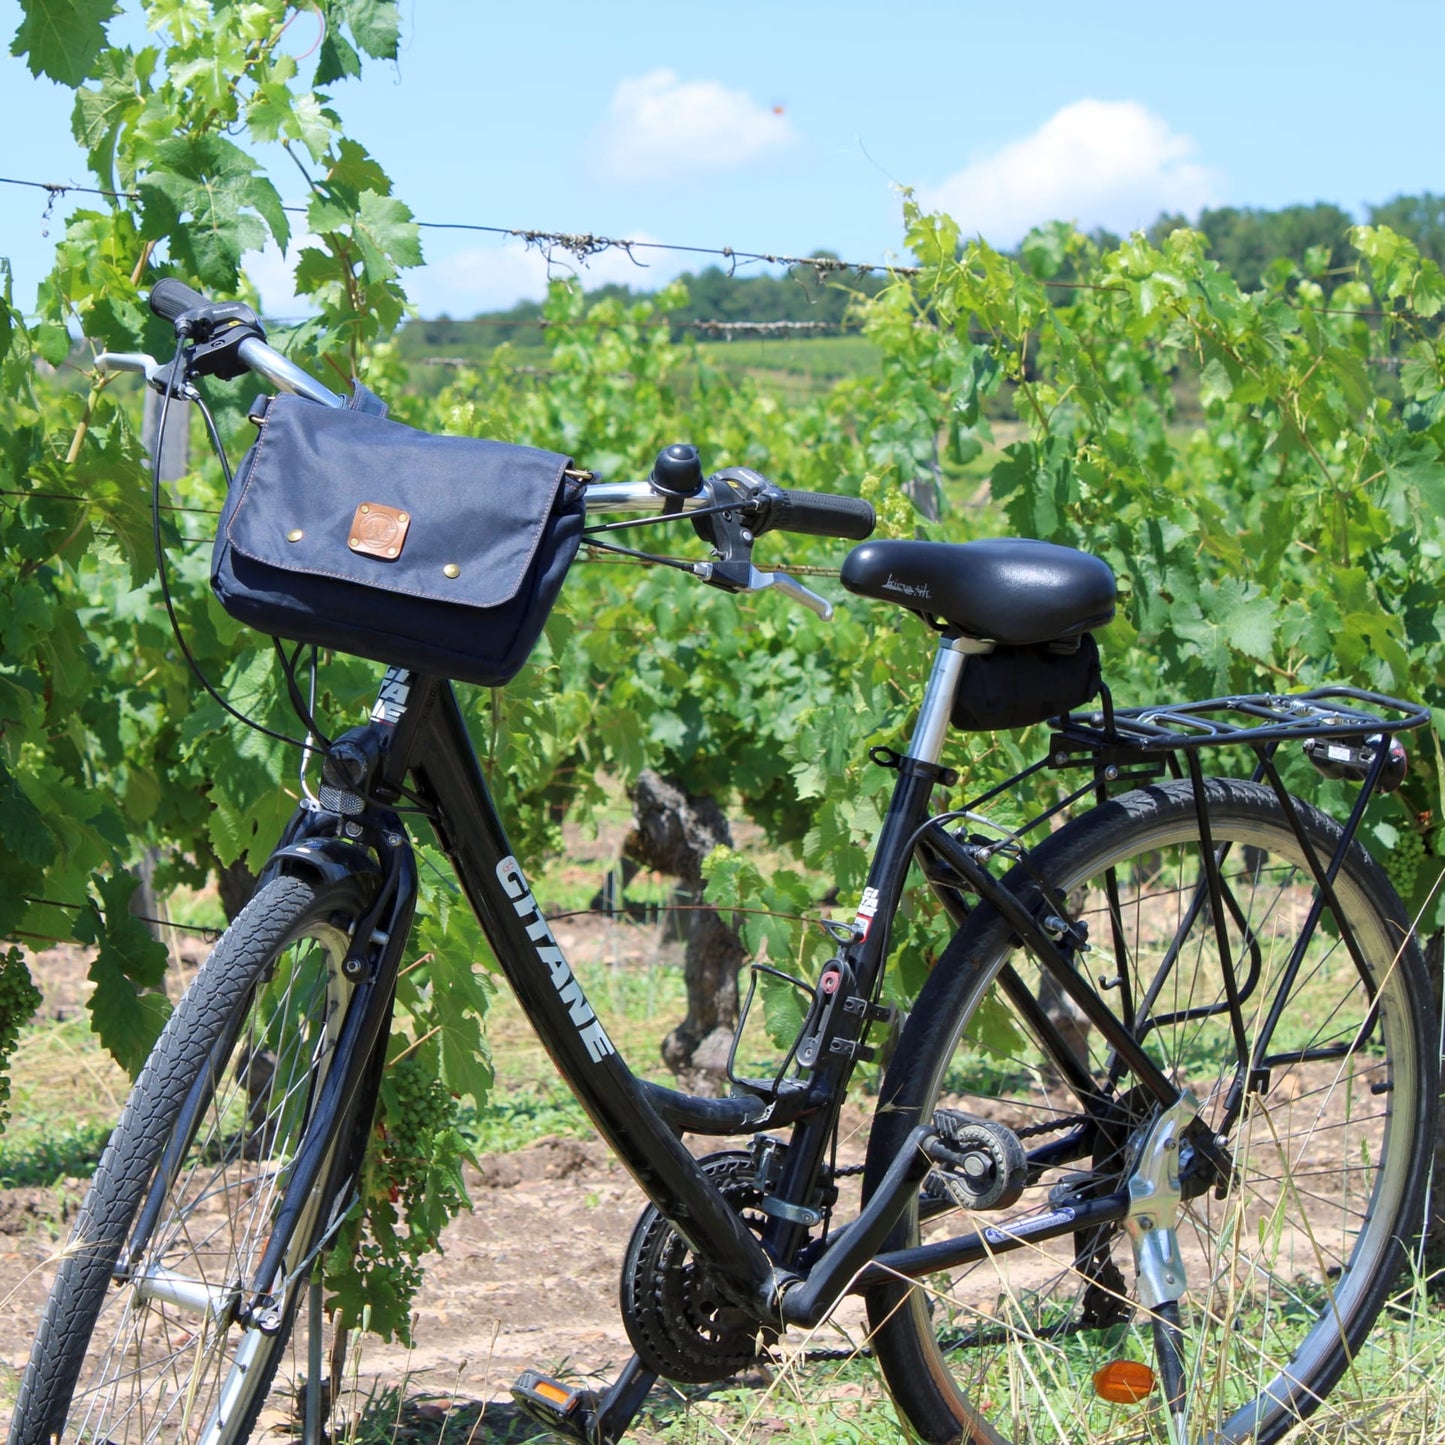 Handlebar Bike Bag - Handmade in France - Blue